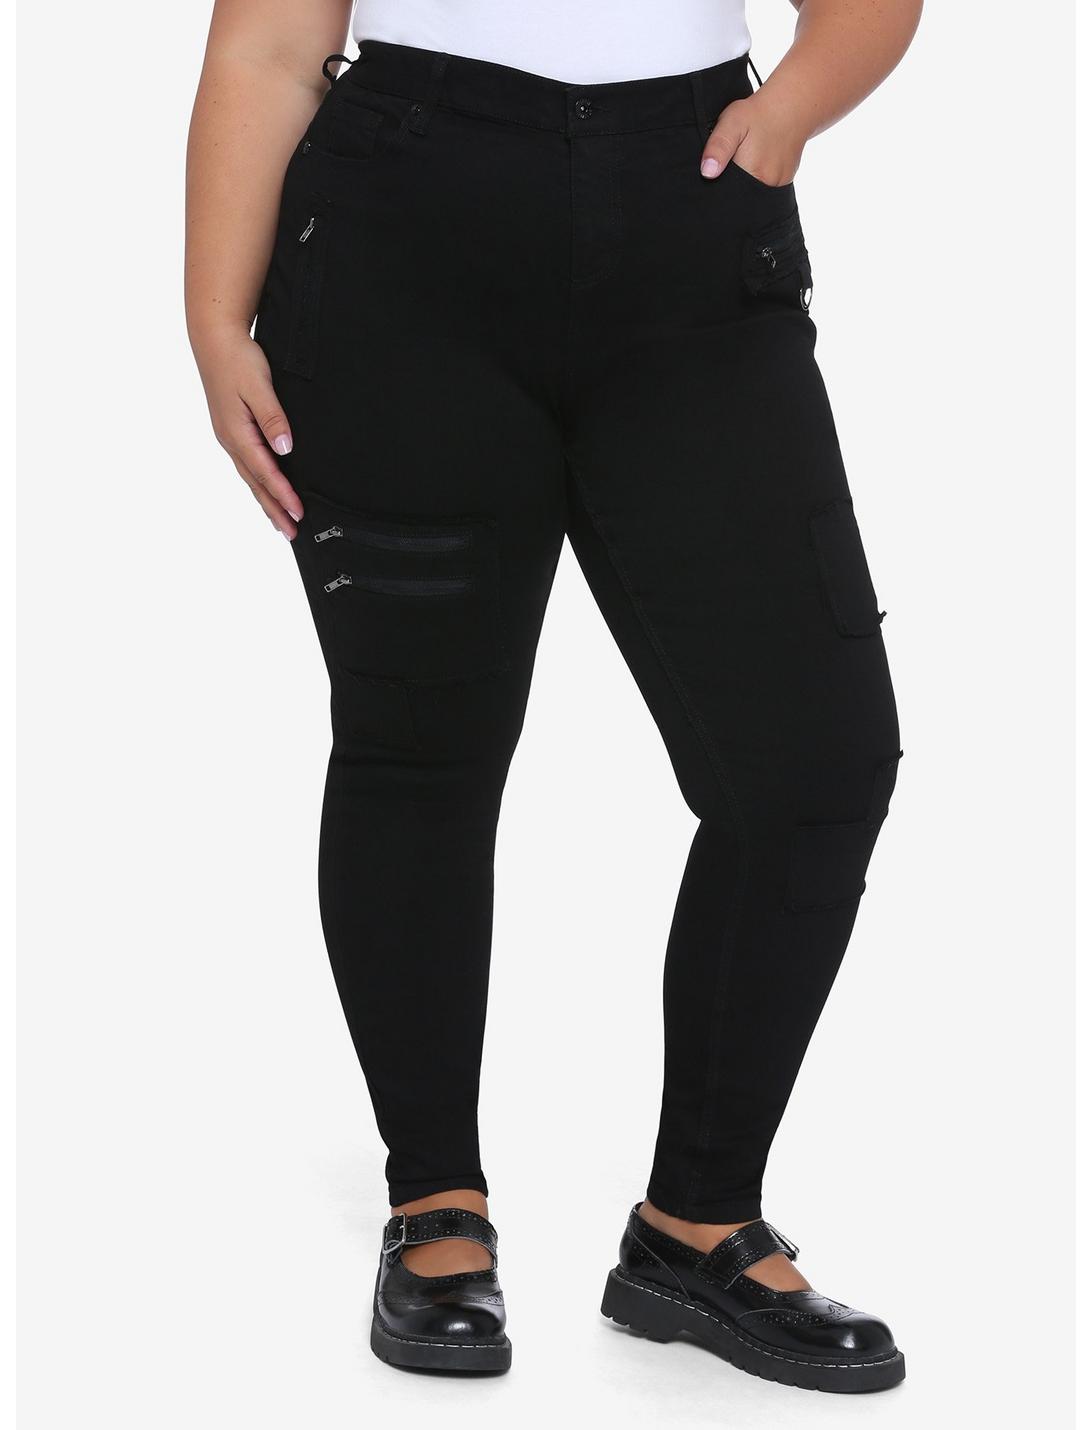 HT Denim Black Patches & Zippers Hi-Rise Super Skinny Plus Size, BLACK, hi-res